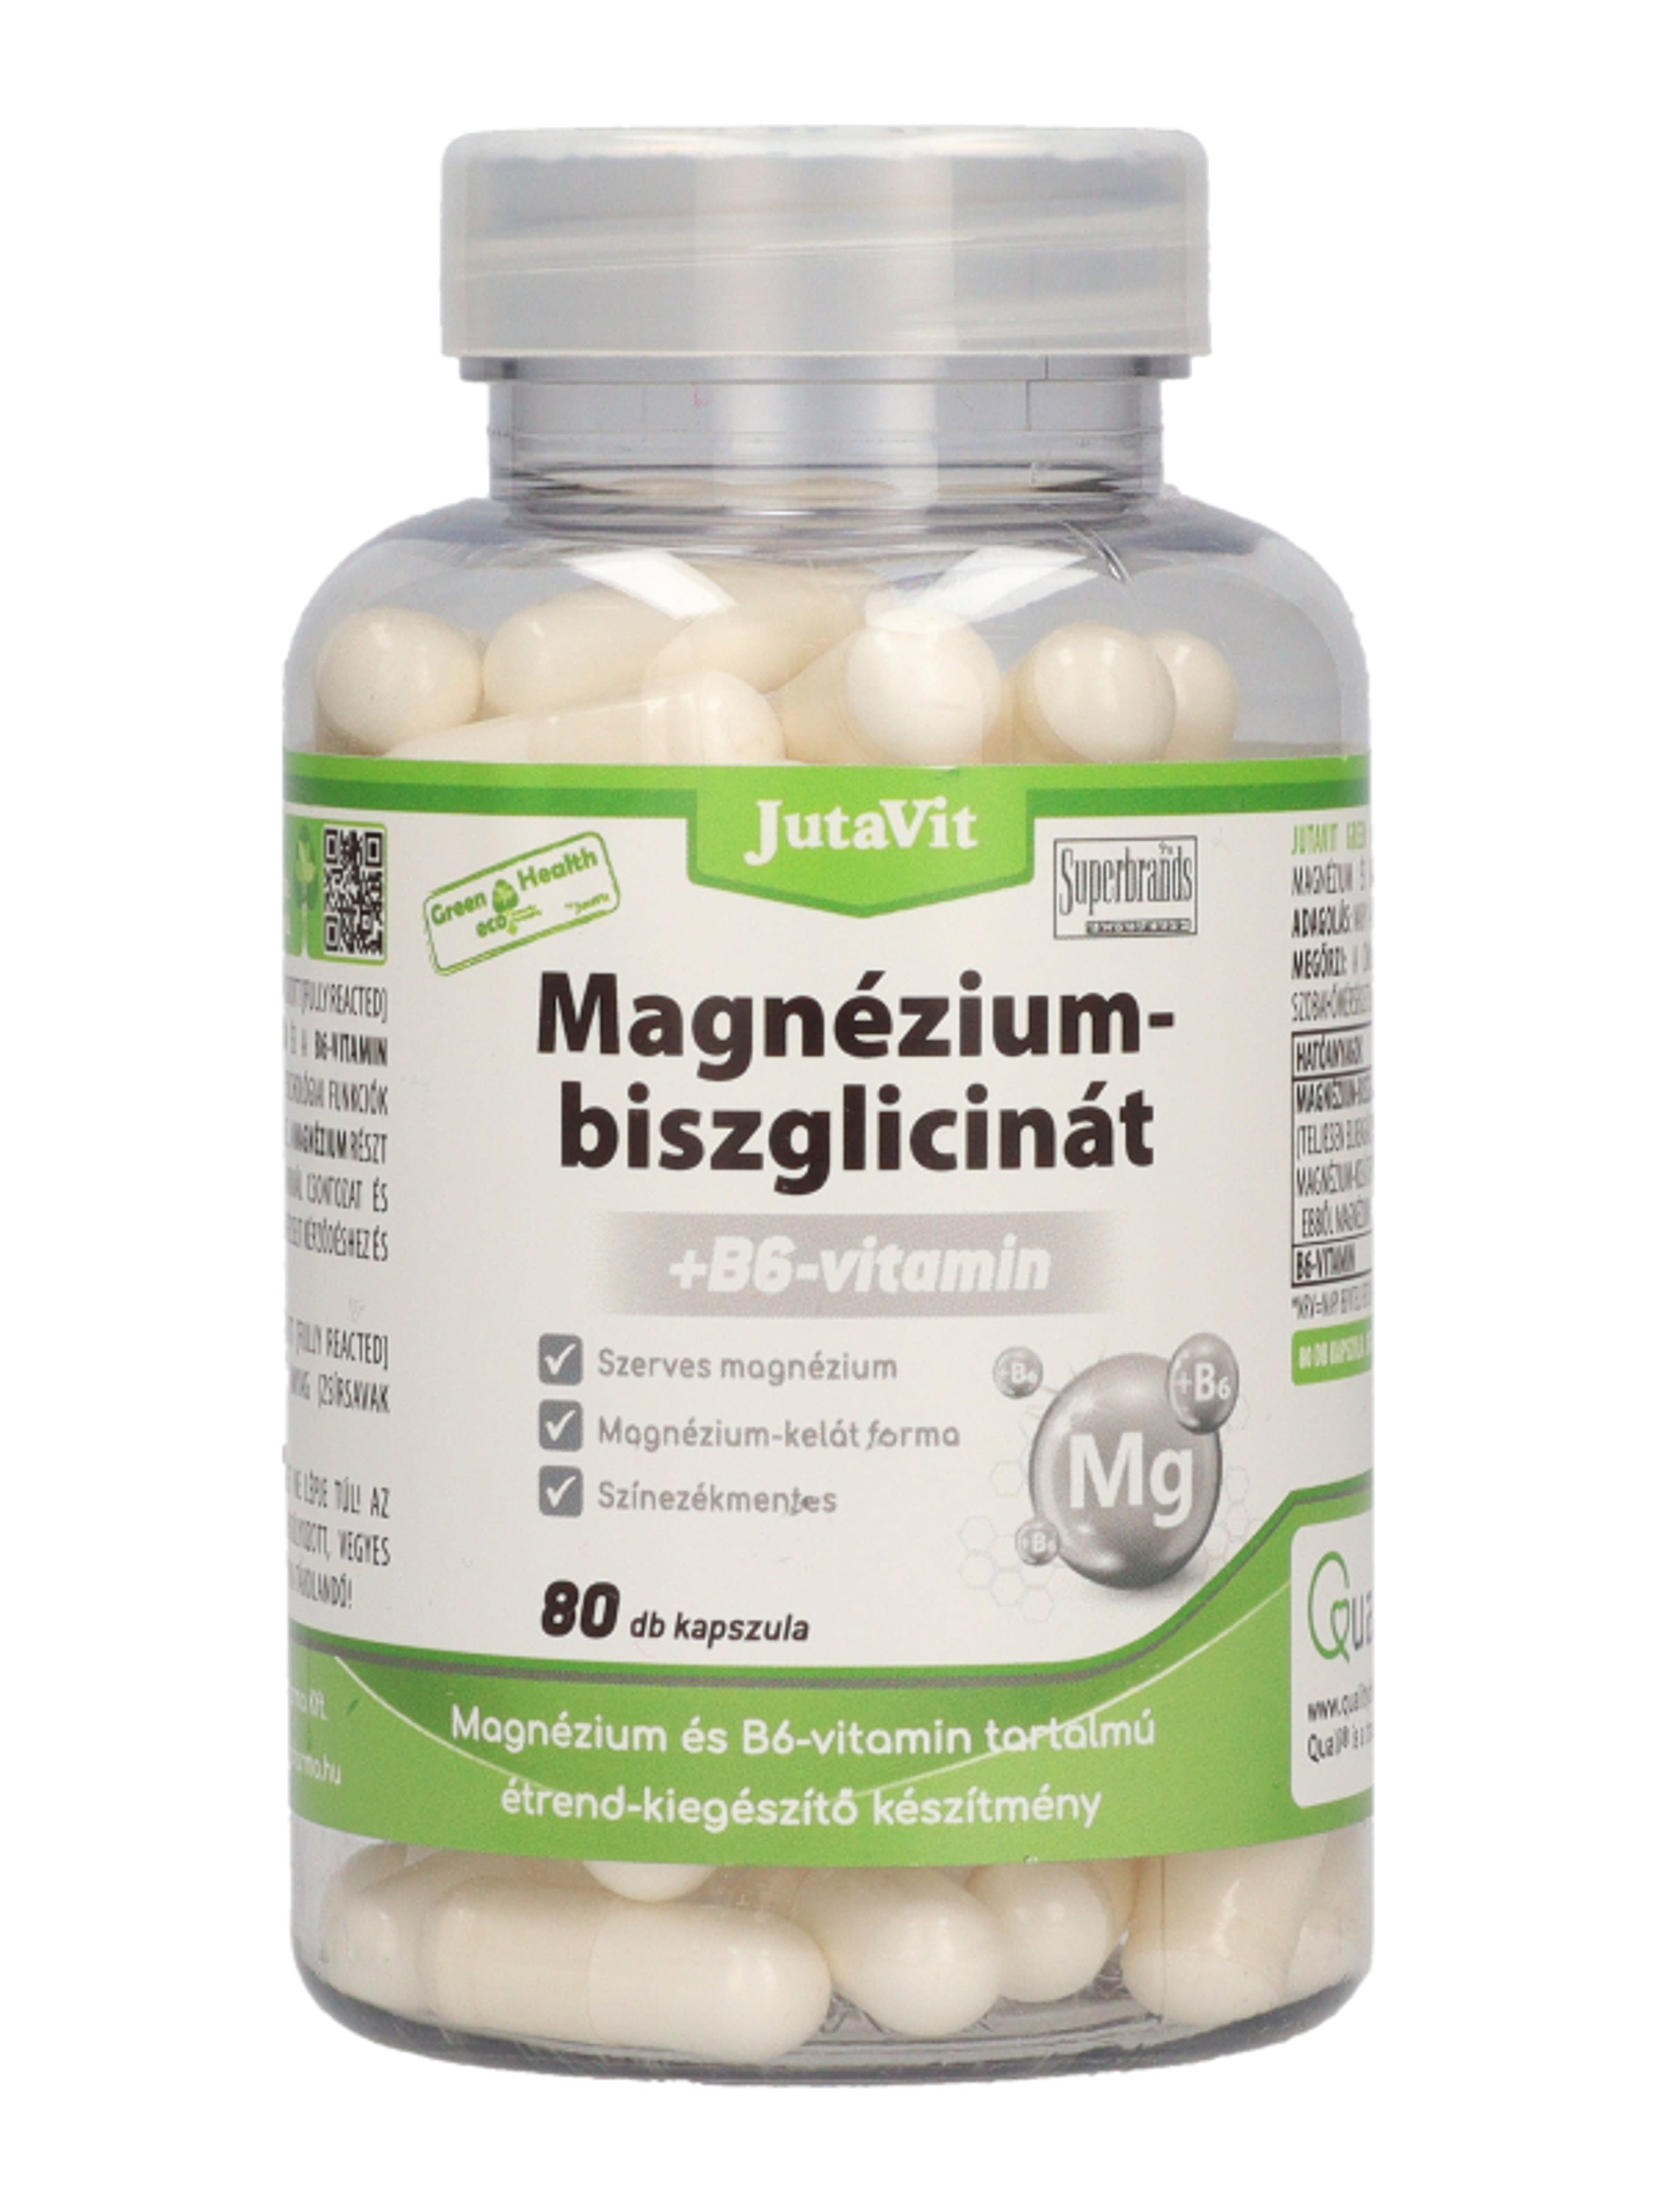 JutaVit Green&Health Magnézium-biszglicinát + B6-vitamin kapszula - 80 db